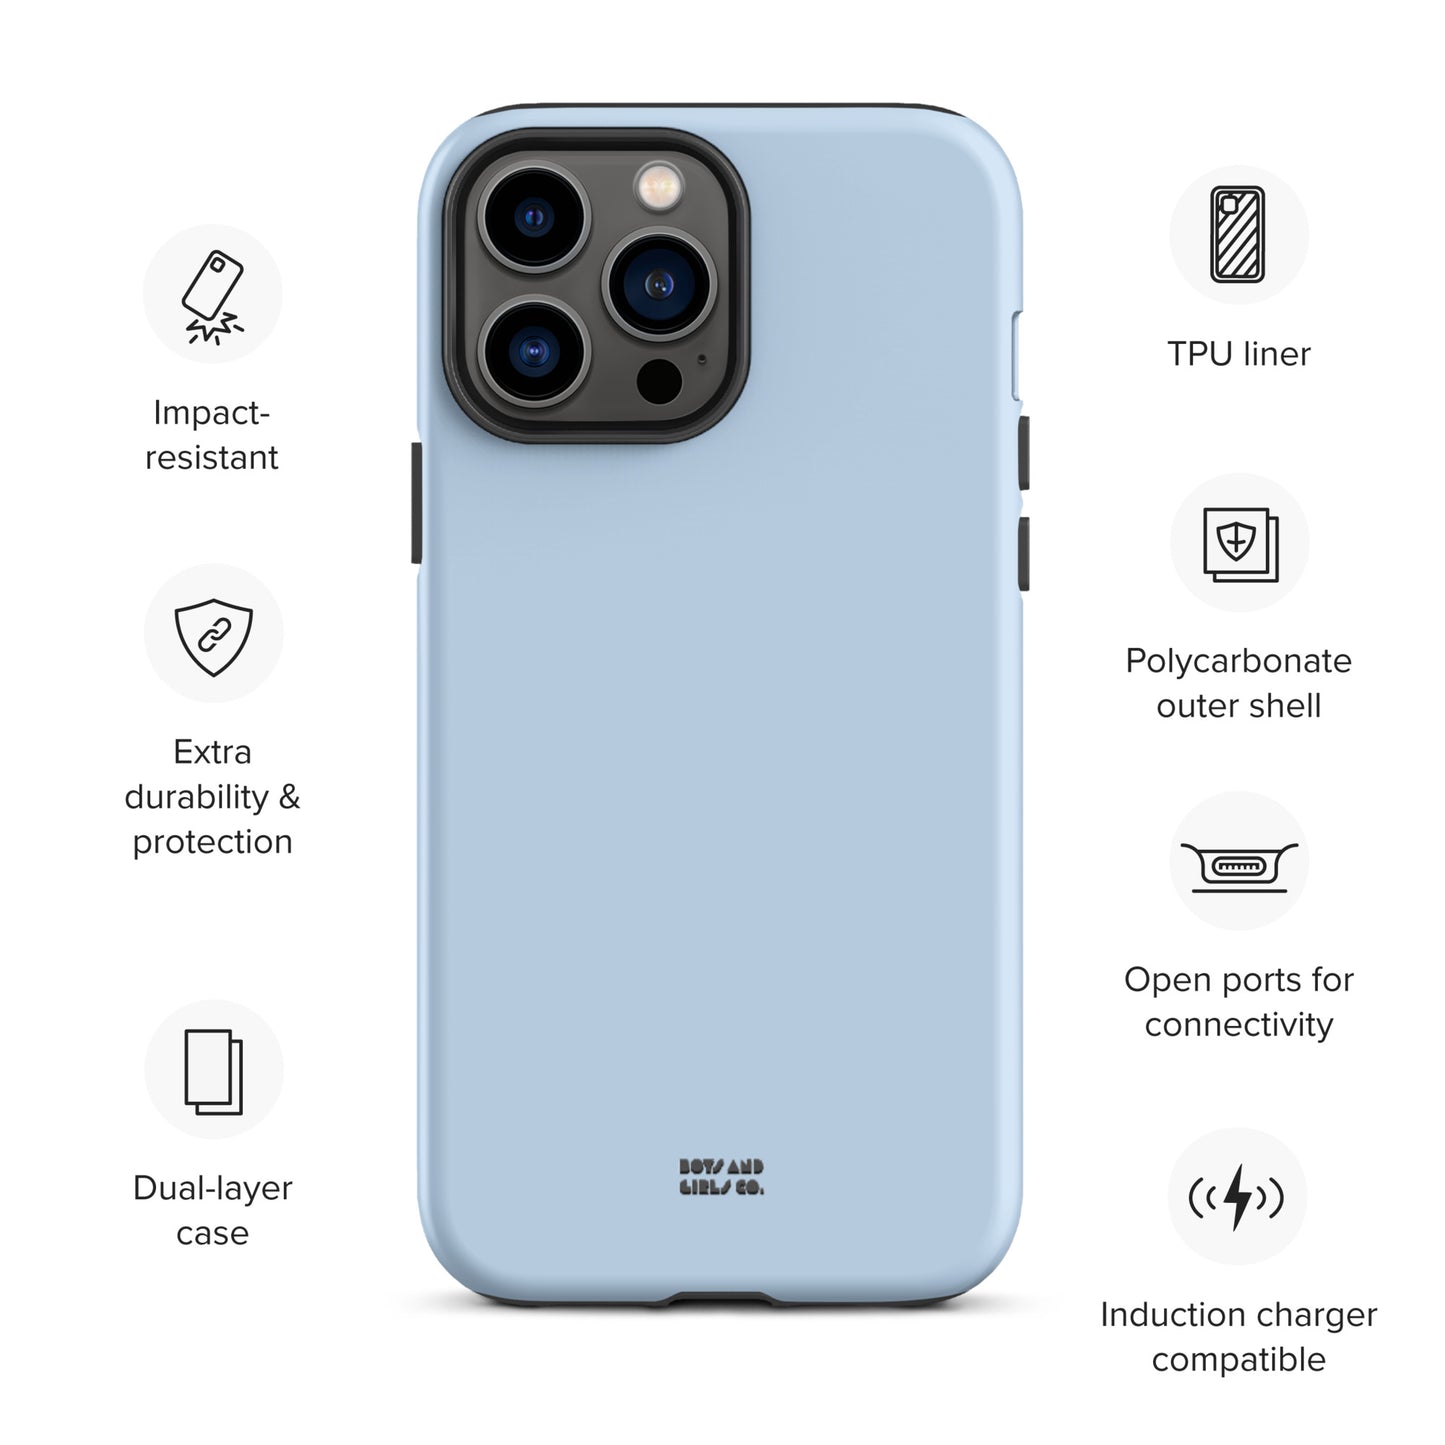 POWDER BLUE - Tough iPhone case